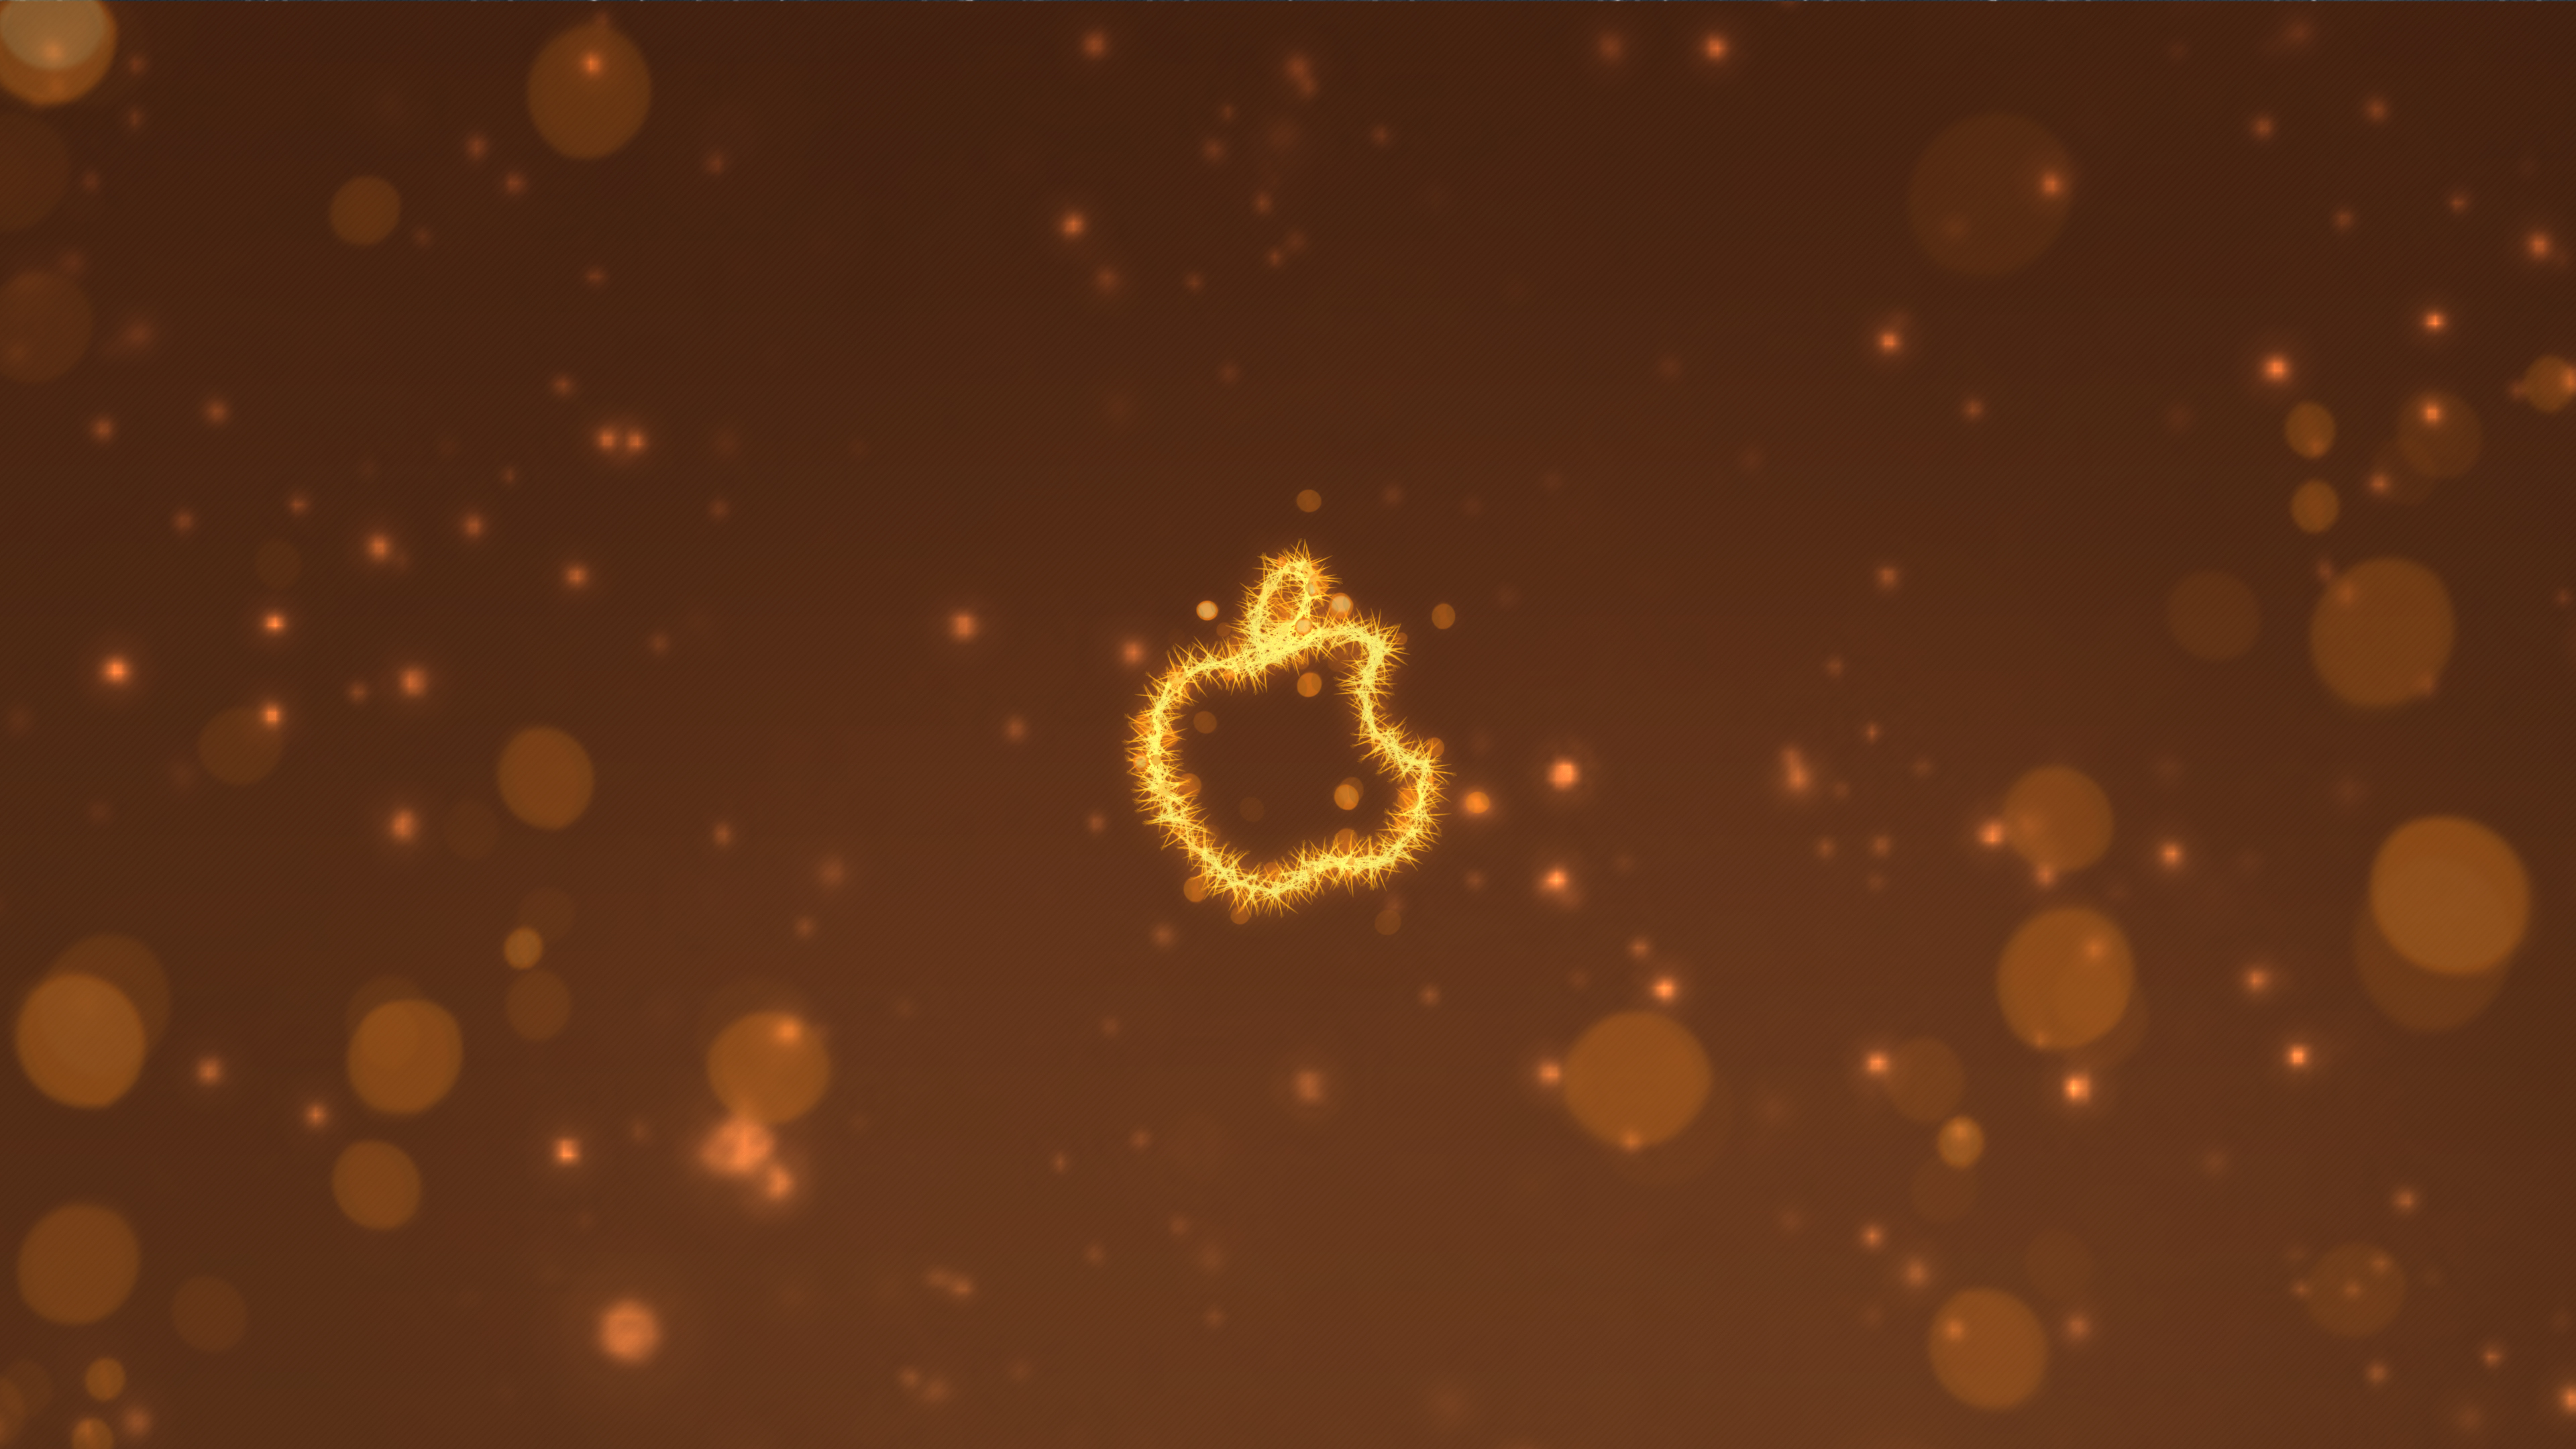 Wallpapers apple computer logo on the desktop